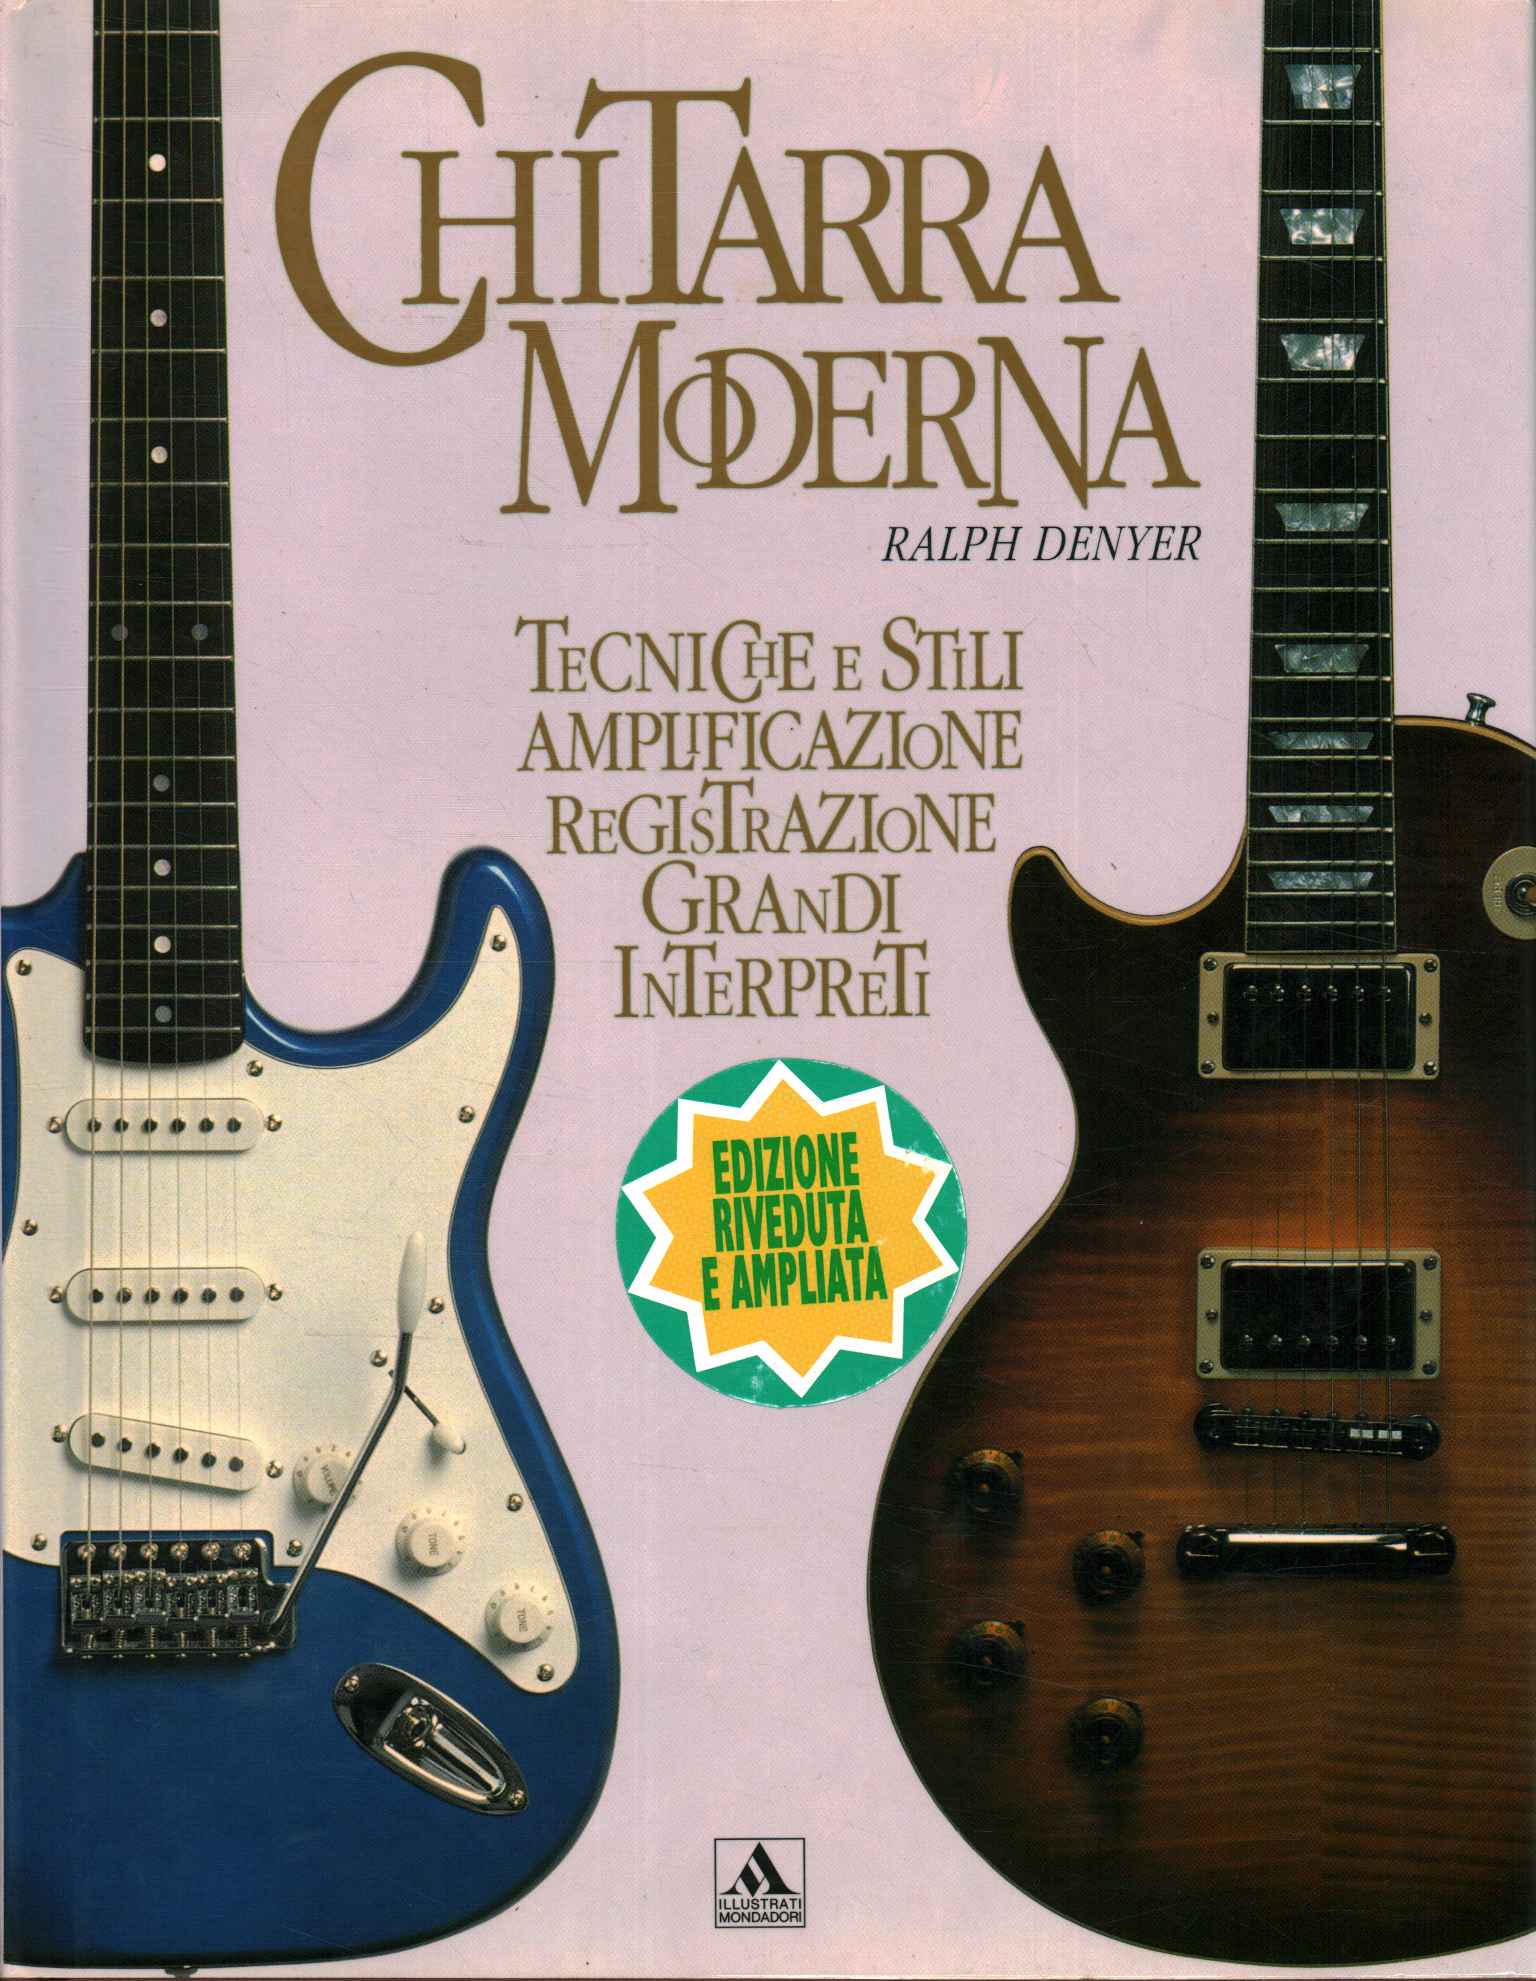 Libros - Manuales - Varios, Guitarra moderna